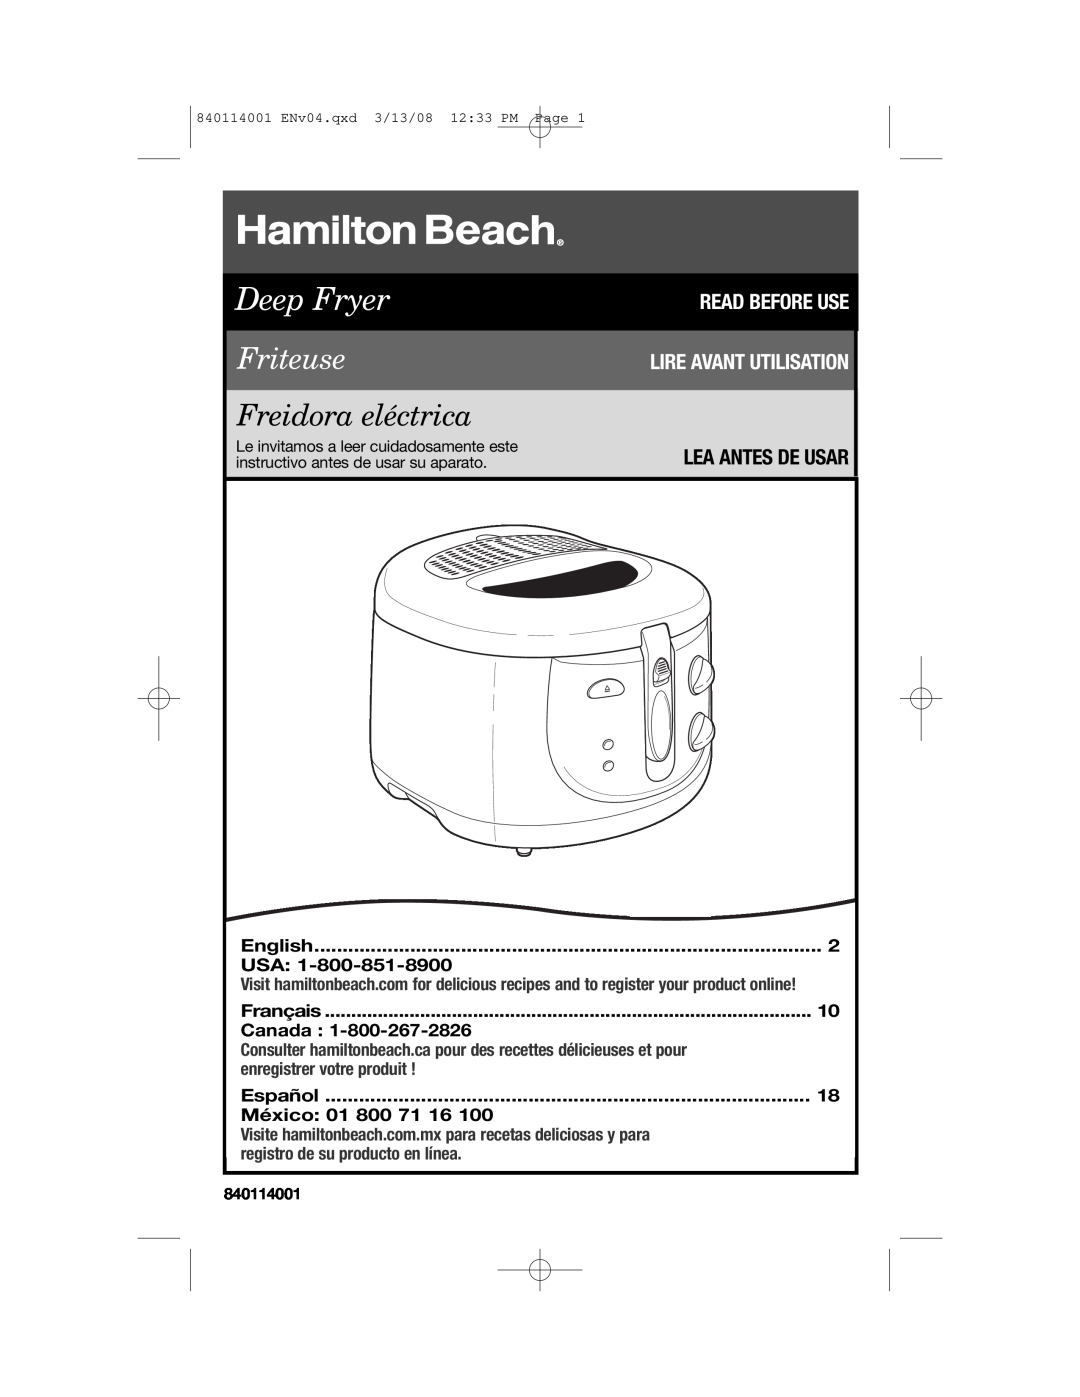 Hamilton Beach 840114001 manual Read Before Use Lire Avant Utilisation, Lea Antes De Usar, Deep Fryer, Friteuse 